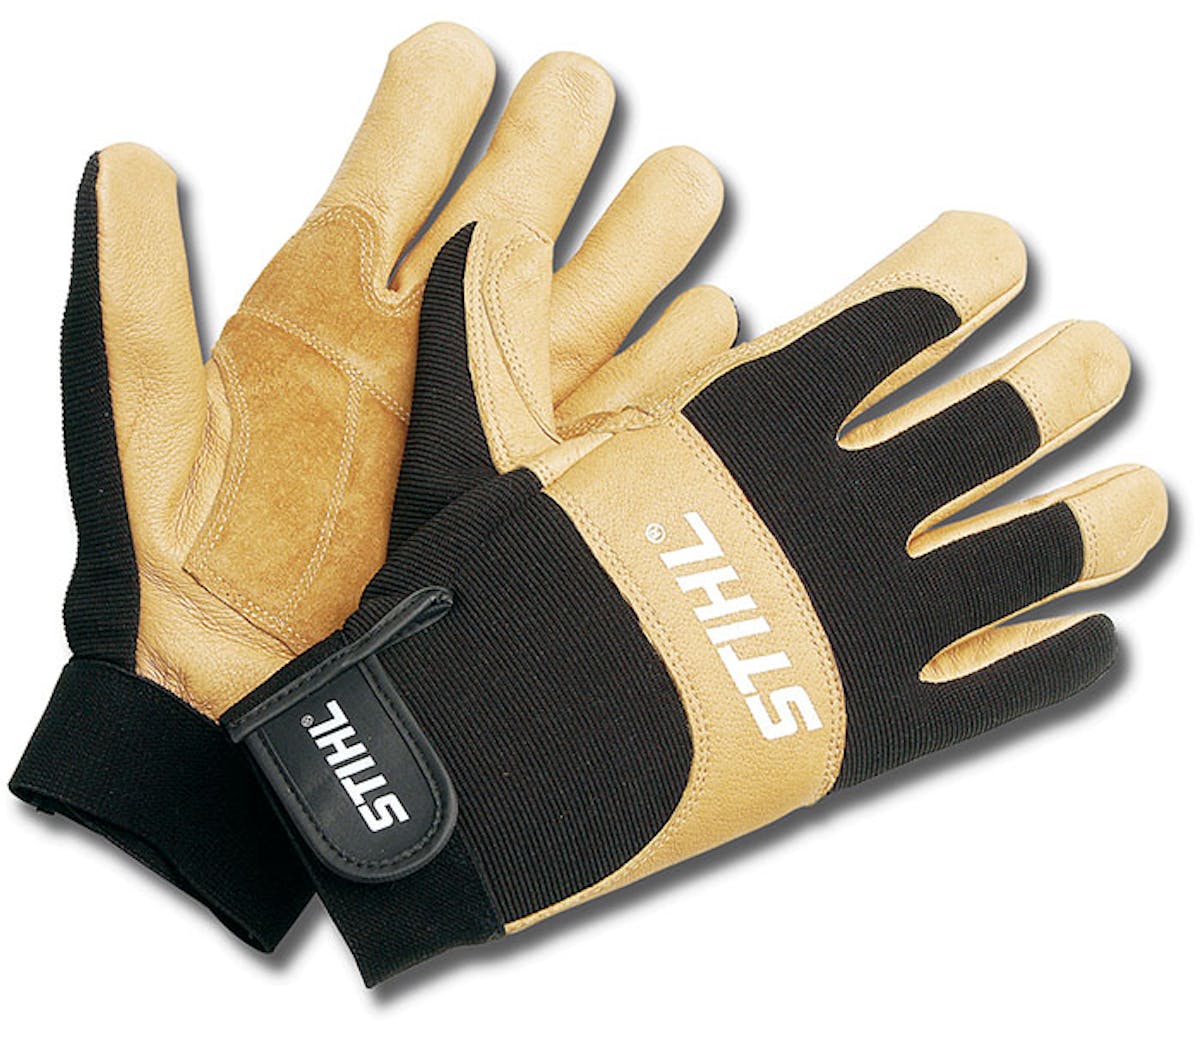 Handschuhe der STIHL Proscaper-Serie